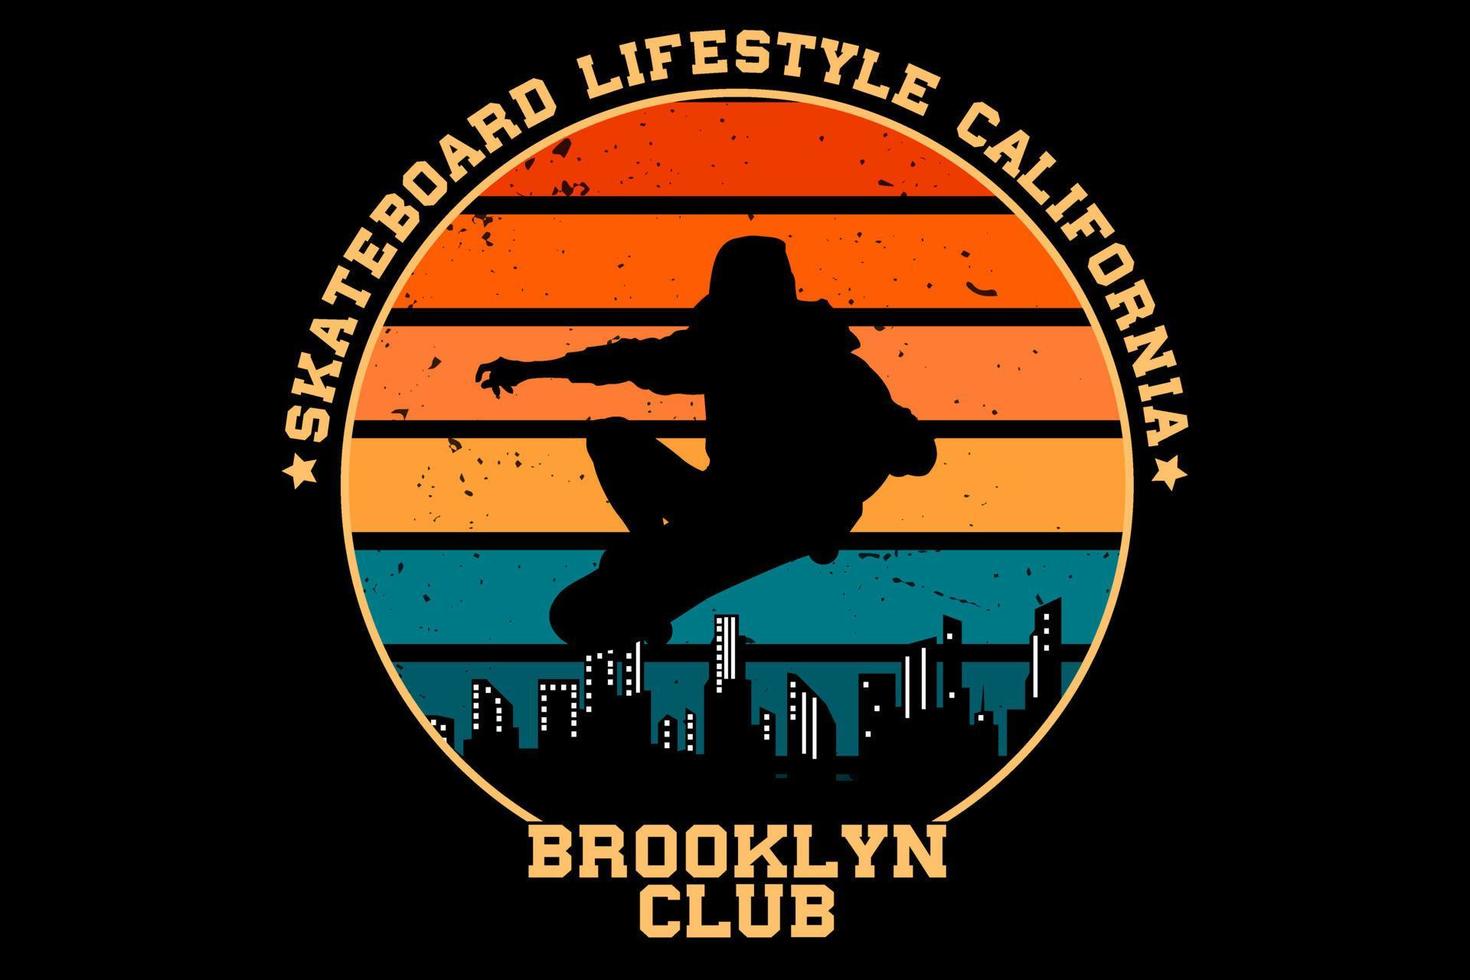 Skateboard Lifestyle Kalifornien Brooklyn Club Retro Vintage Design vektor